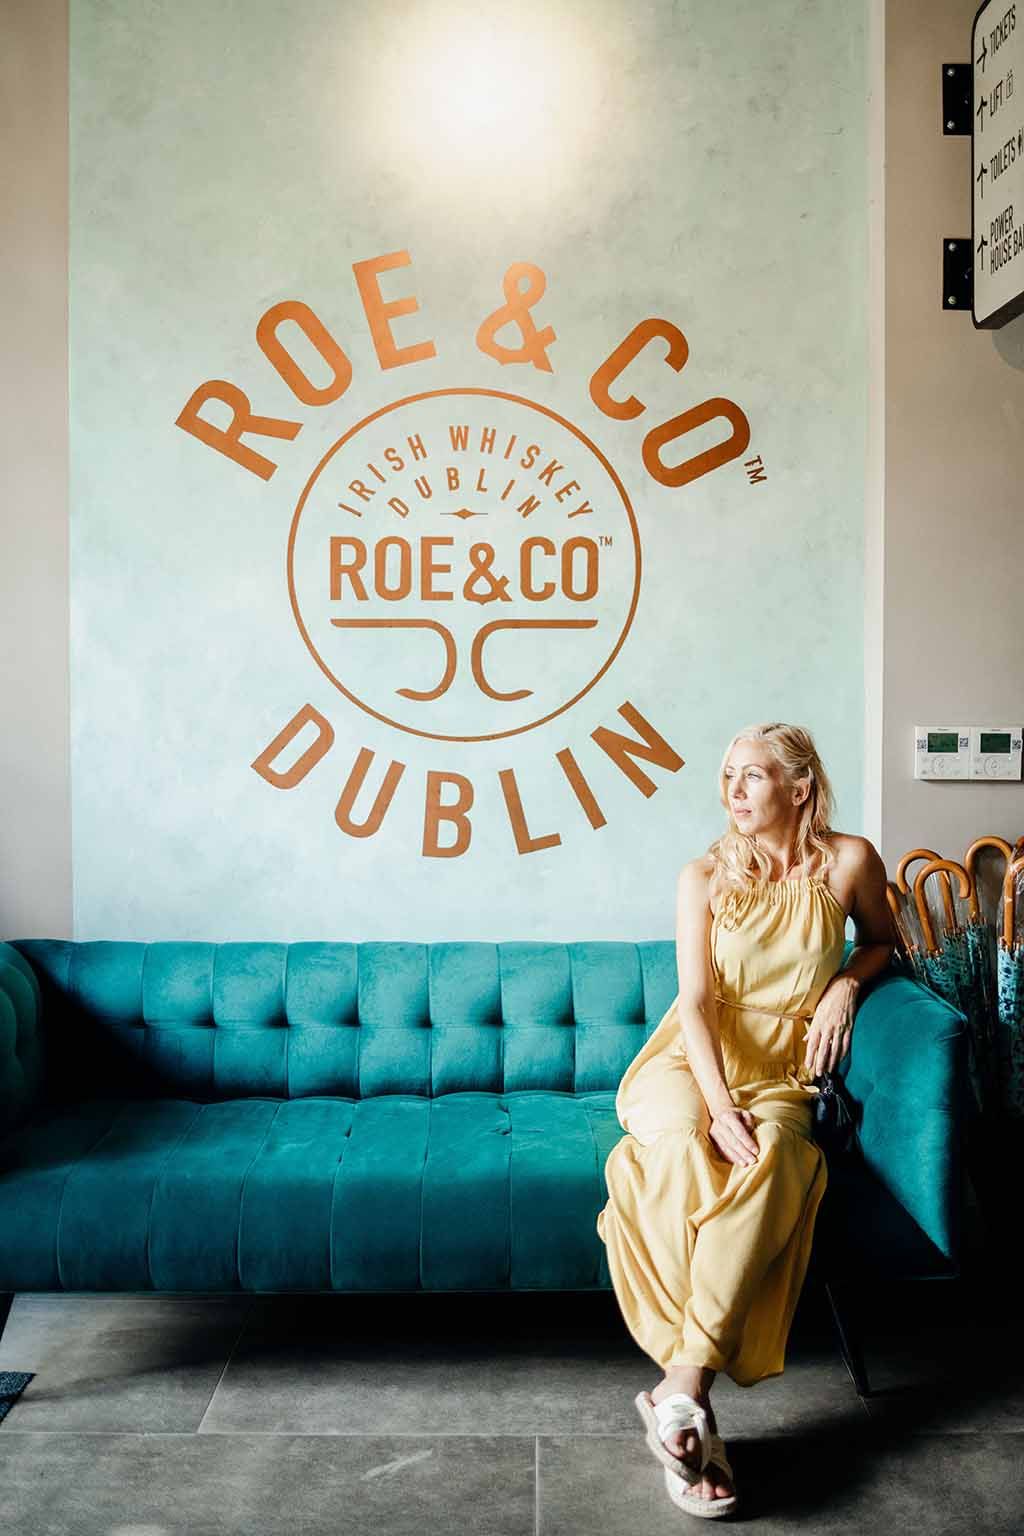 Tanja Roe & Co -viskitislaamossa Dublinissa